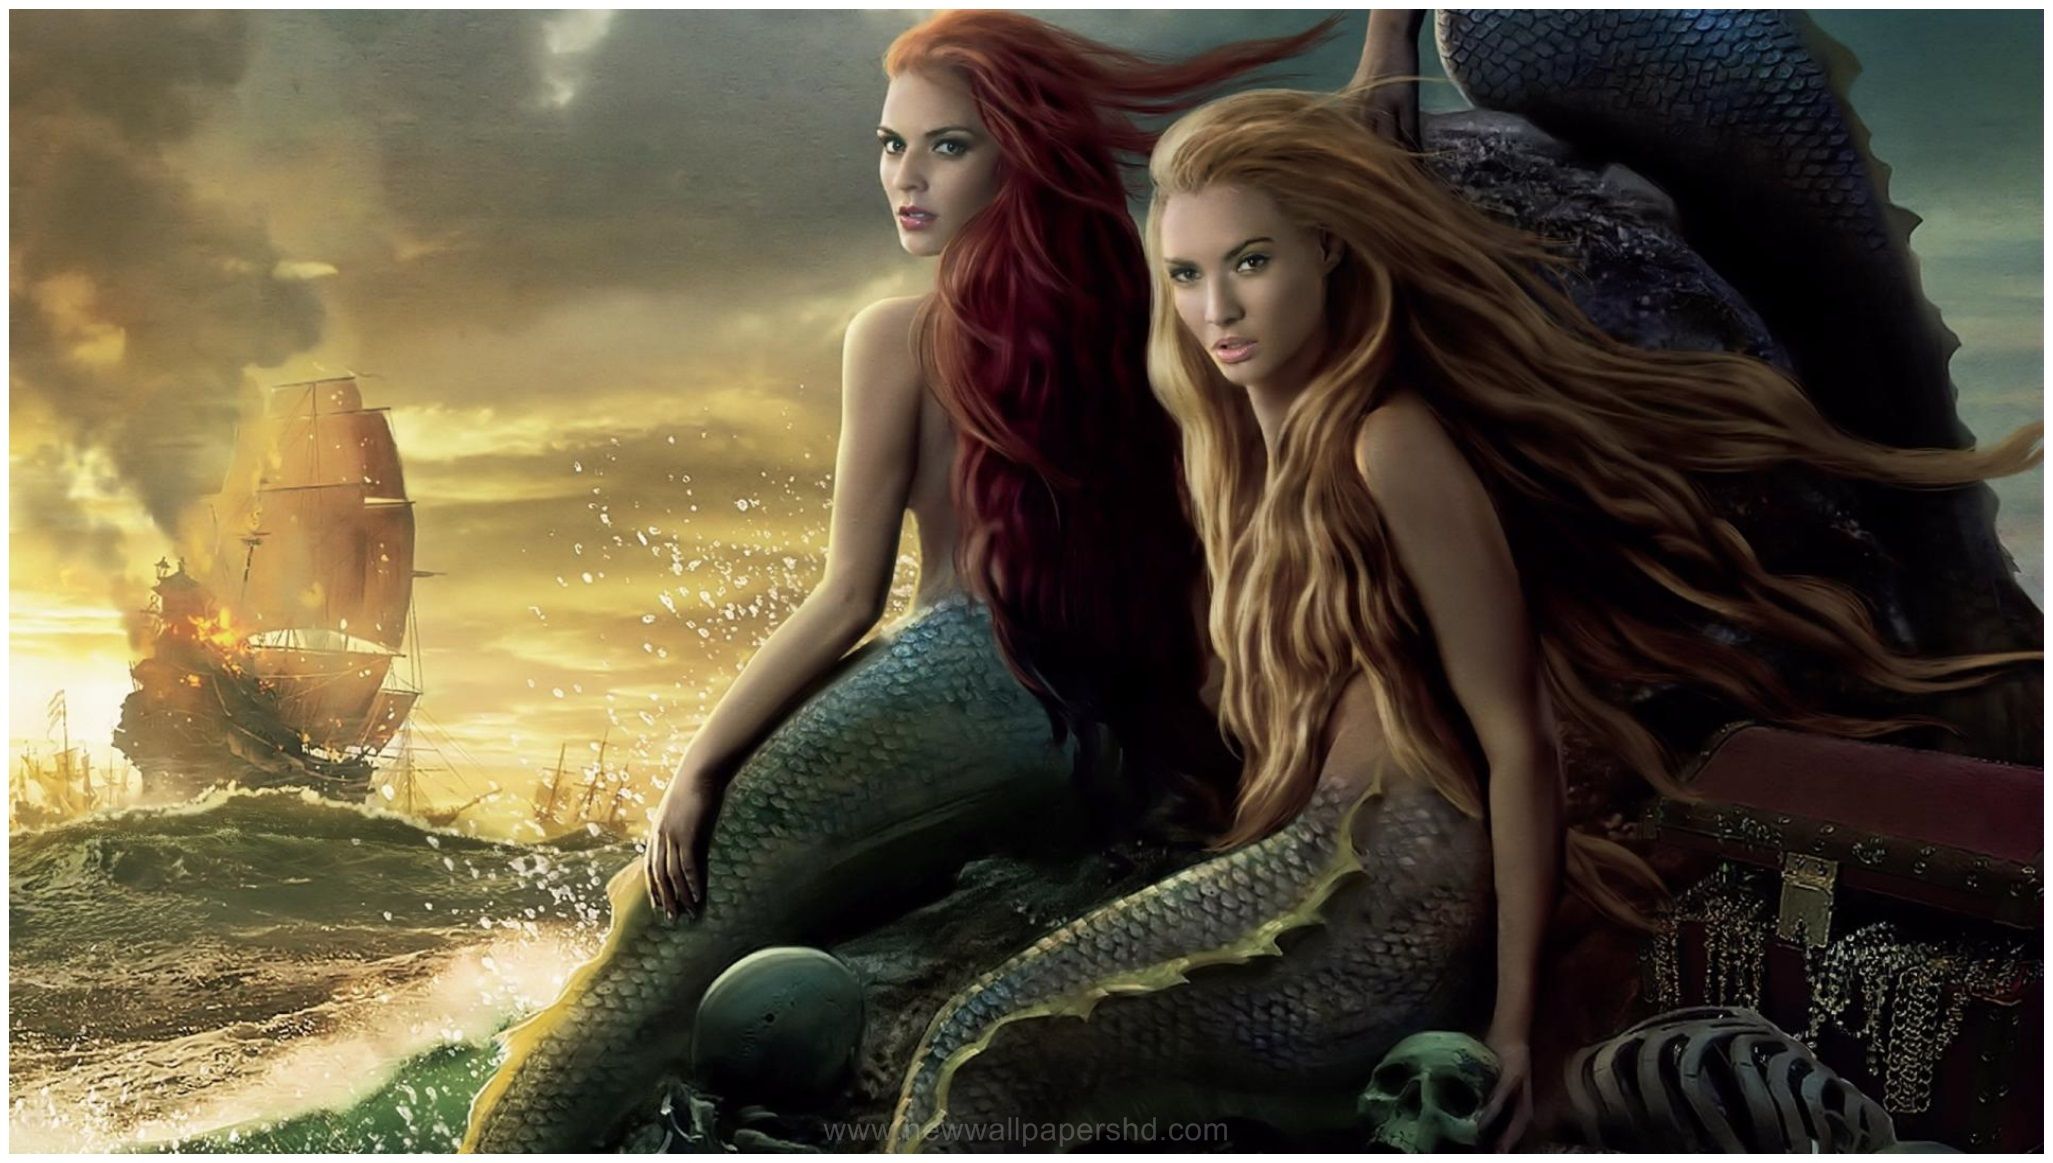 Image for MERMAID GIRL HD WALLPAPER. Evil mermaids, Mermaid poster, Beautiful mermaids